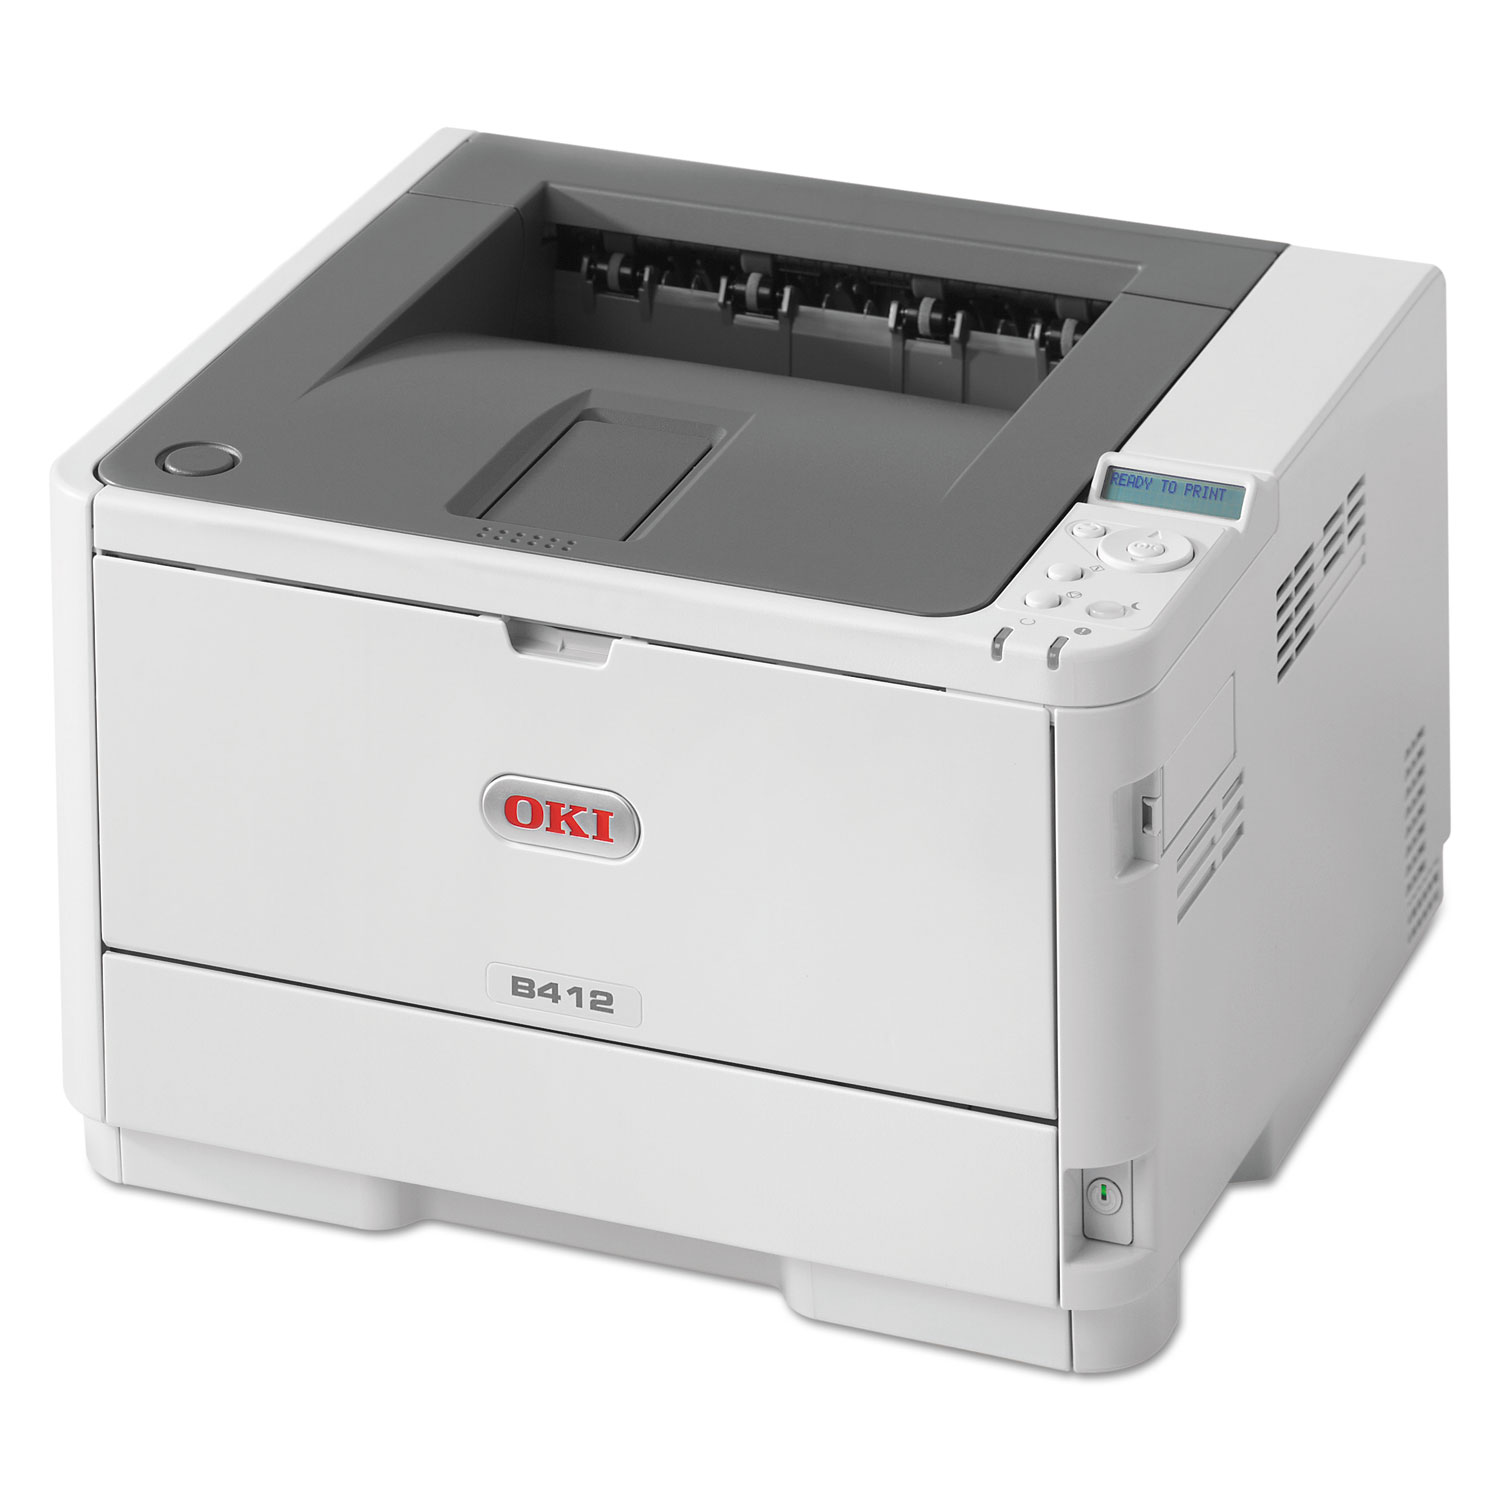 B412DN Monochrome Laser Printer